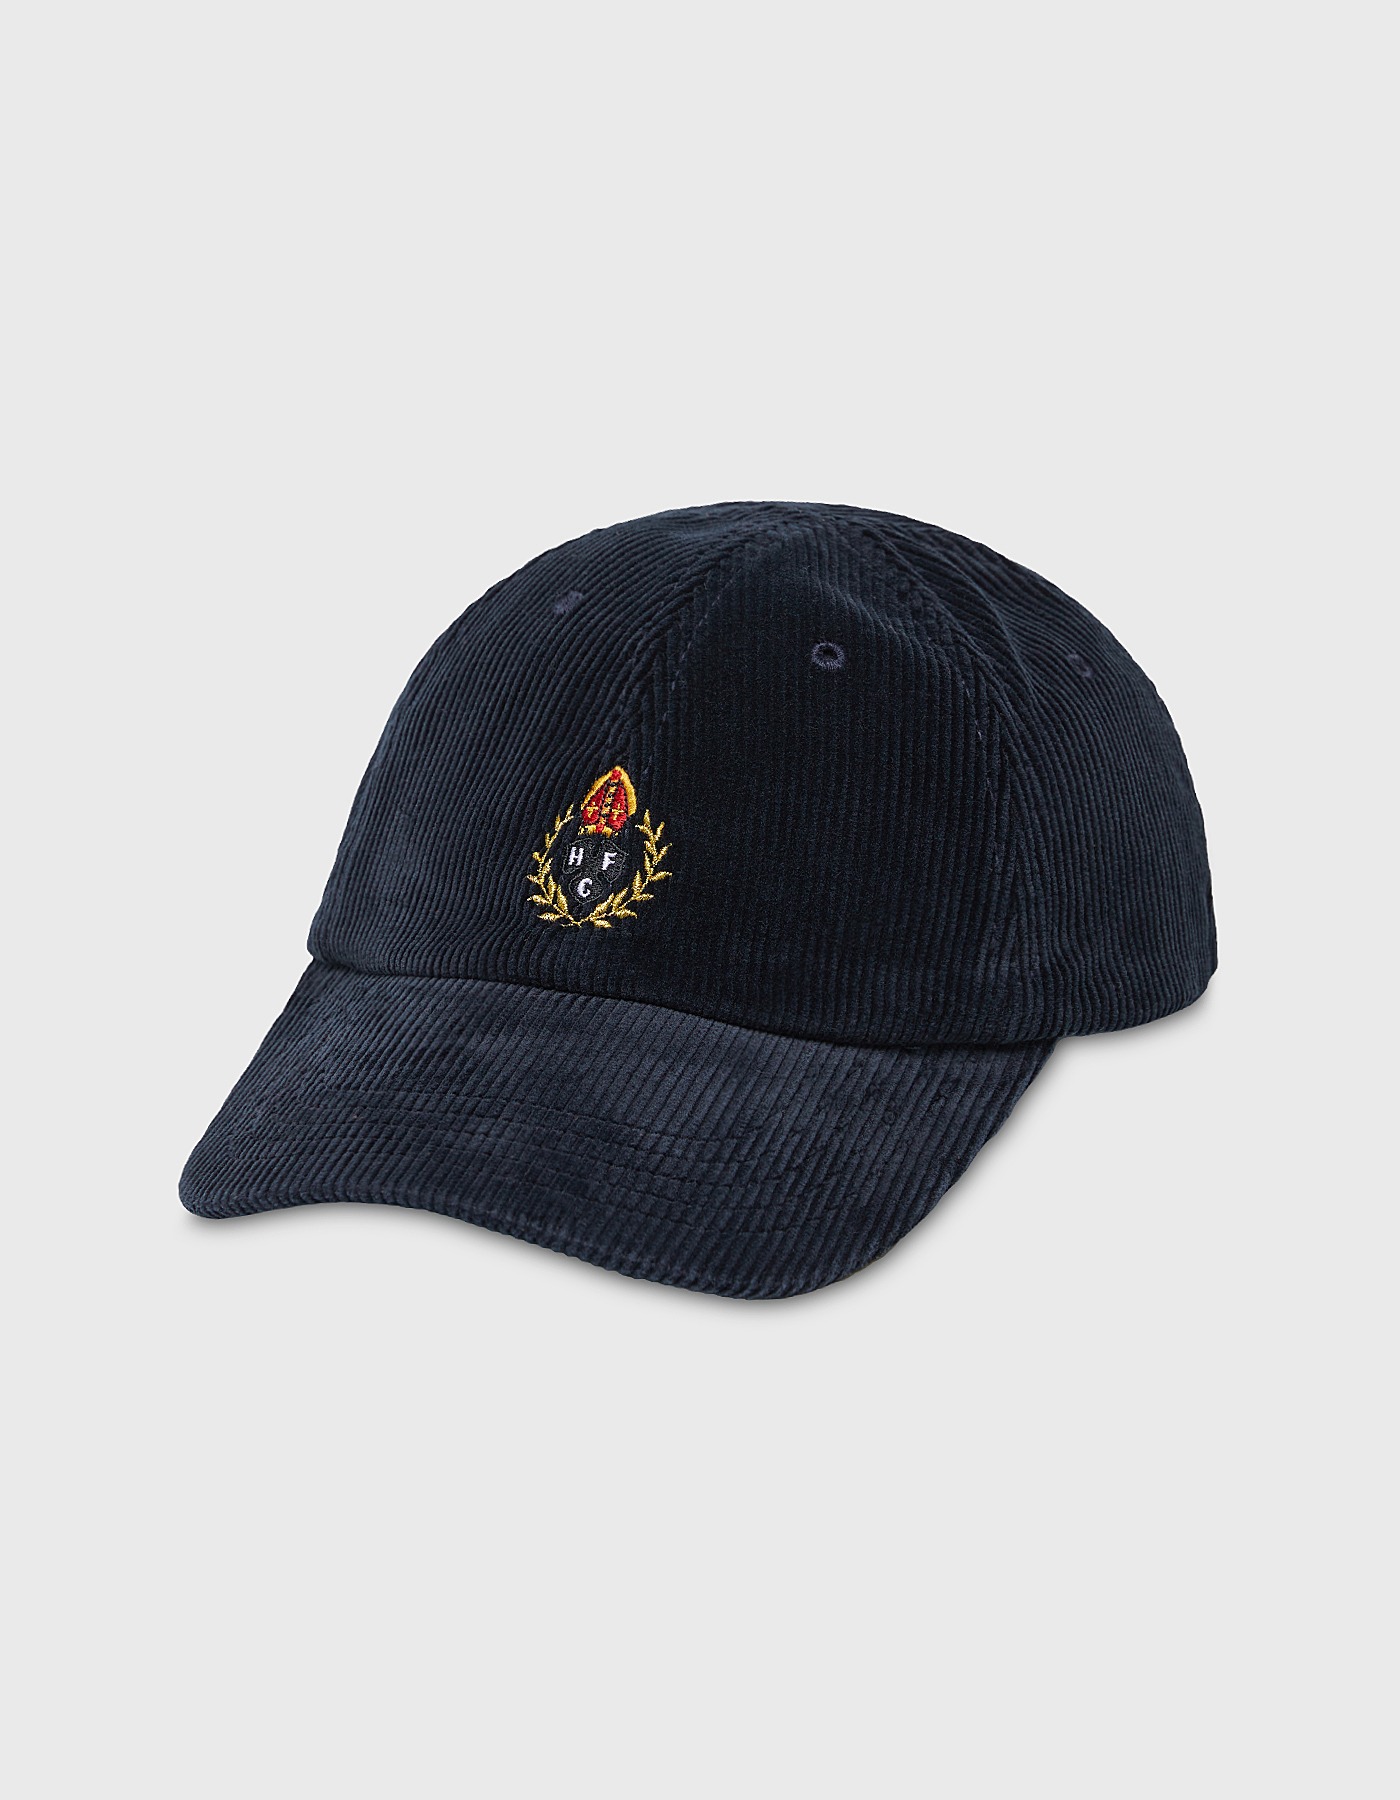 CREST CORDUROY CAP / Navy